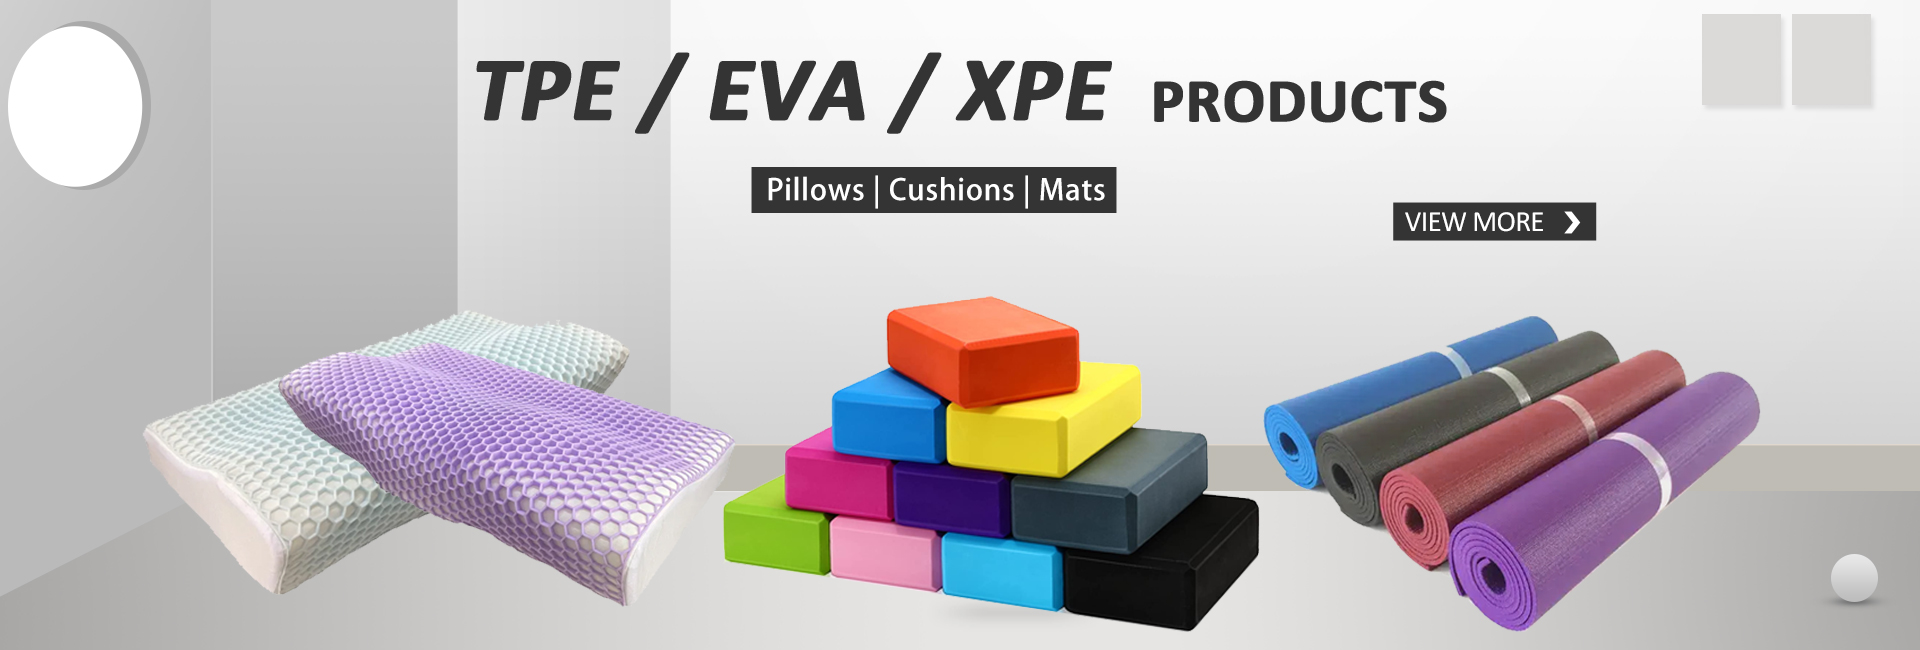 TPE / EVA / XPE Products